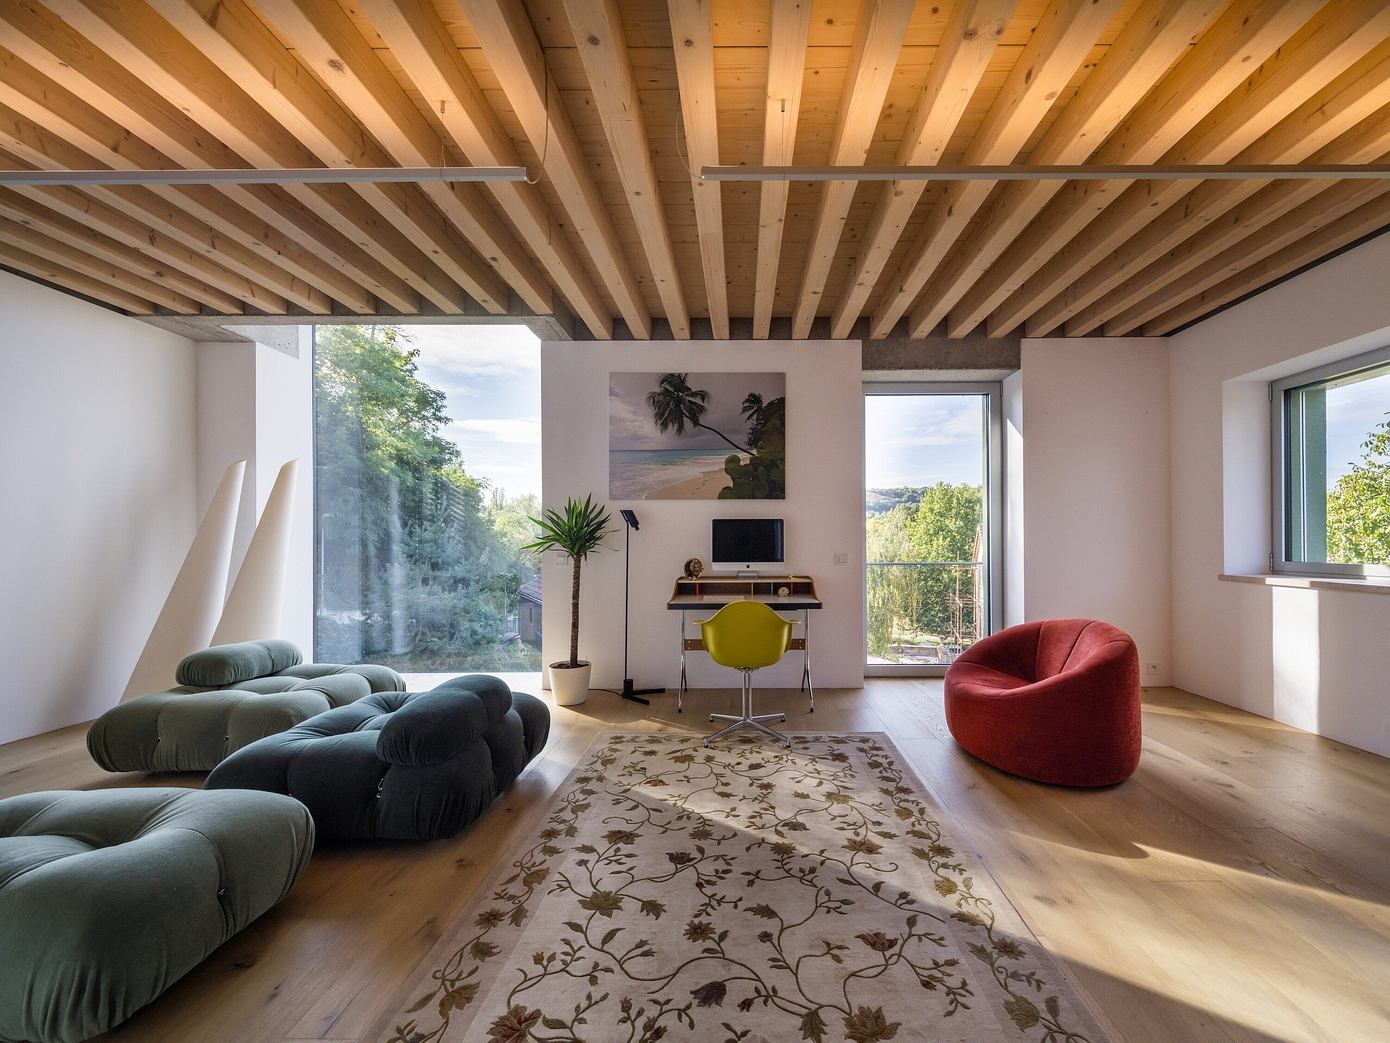 Green House: Aoc architekti’s Sustainable Design in Prague